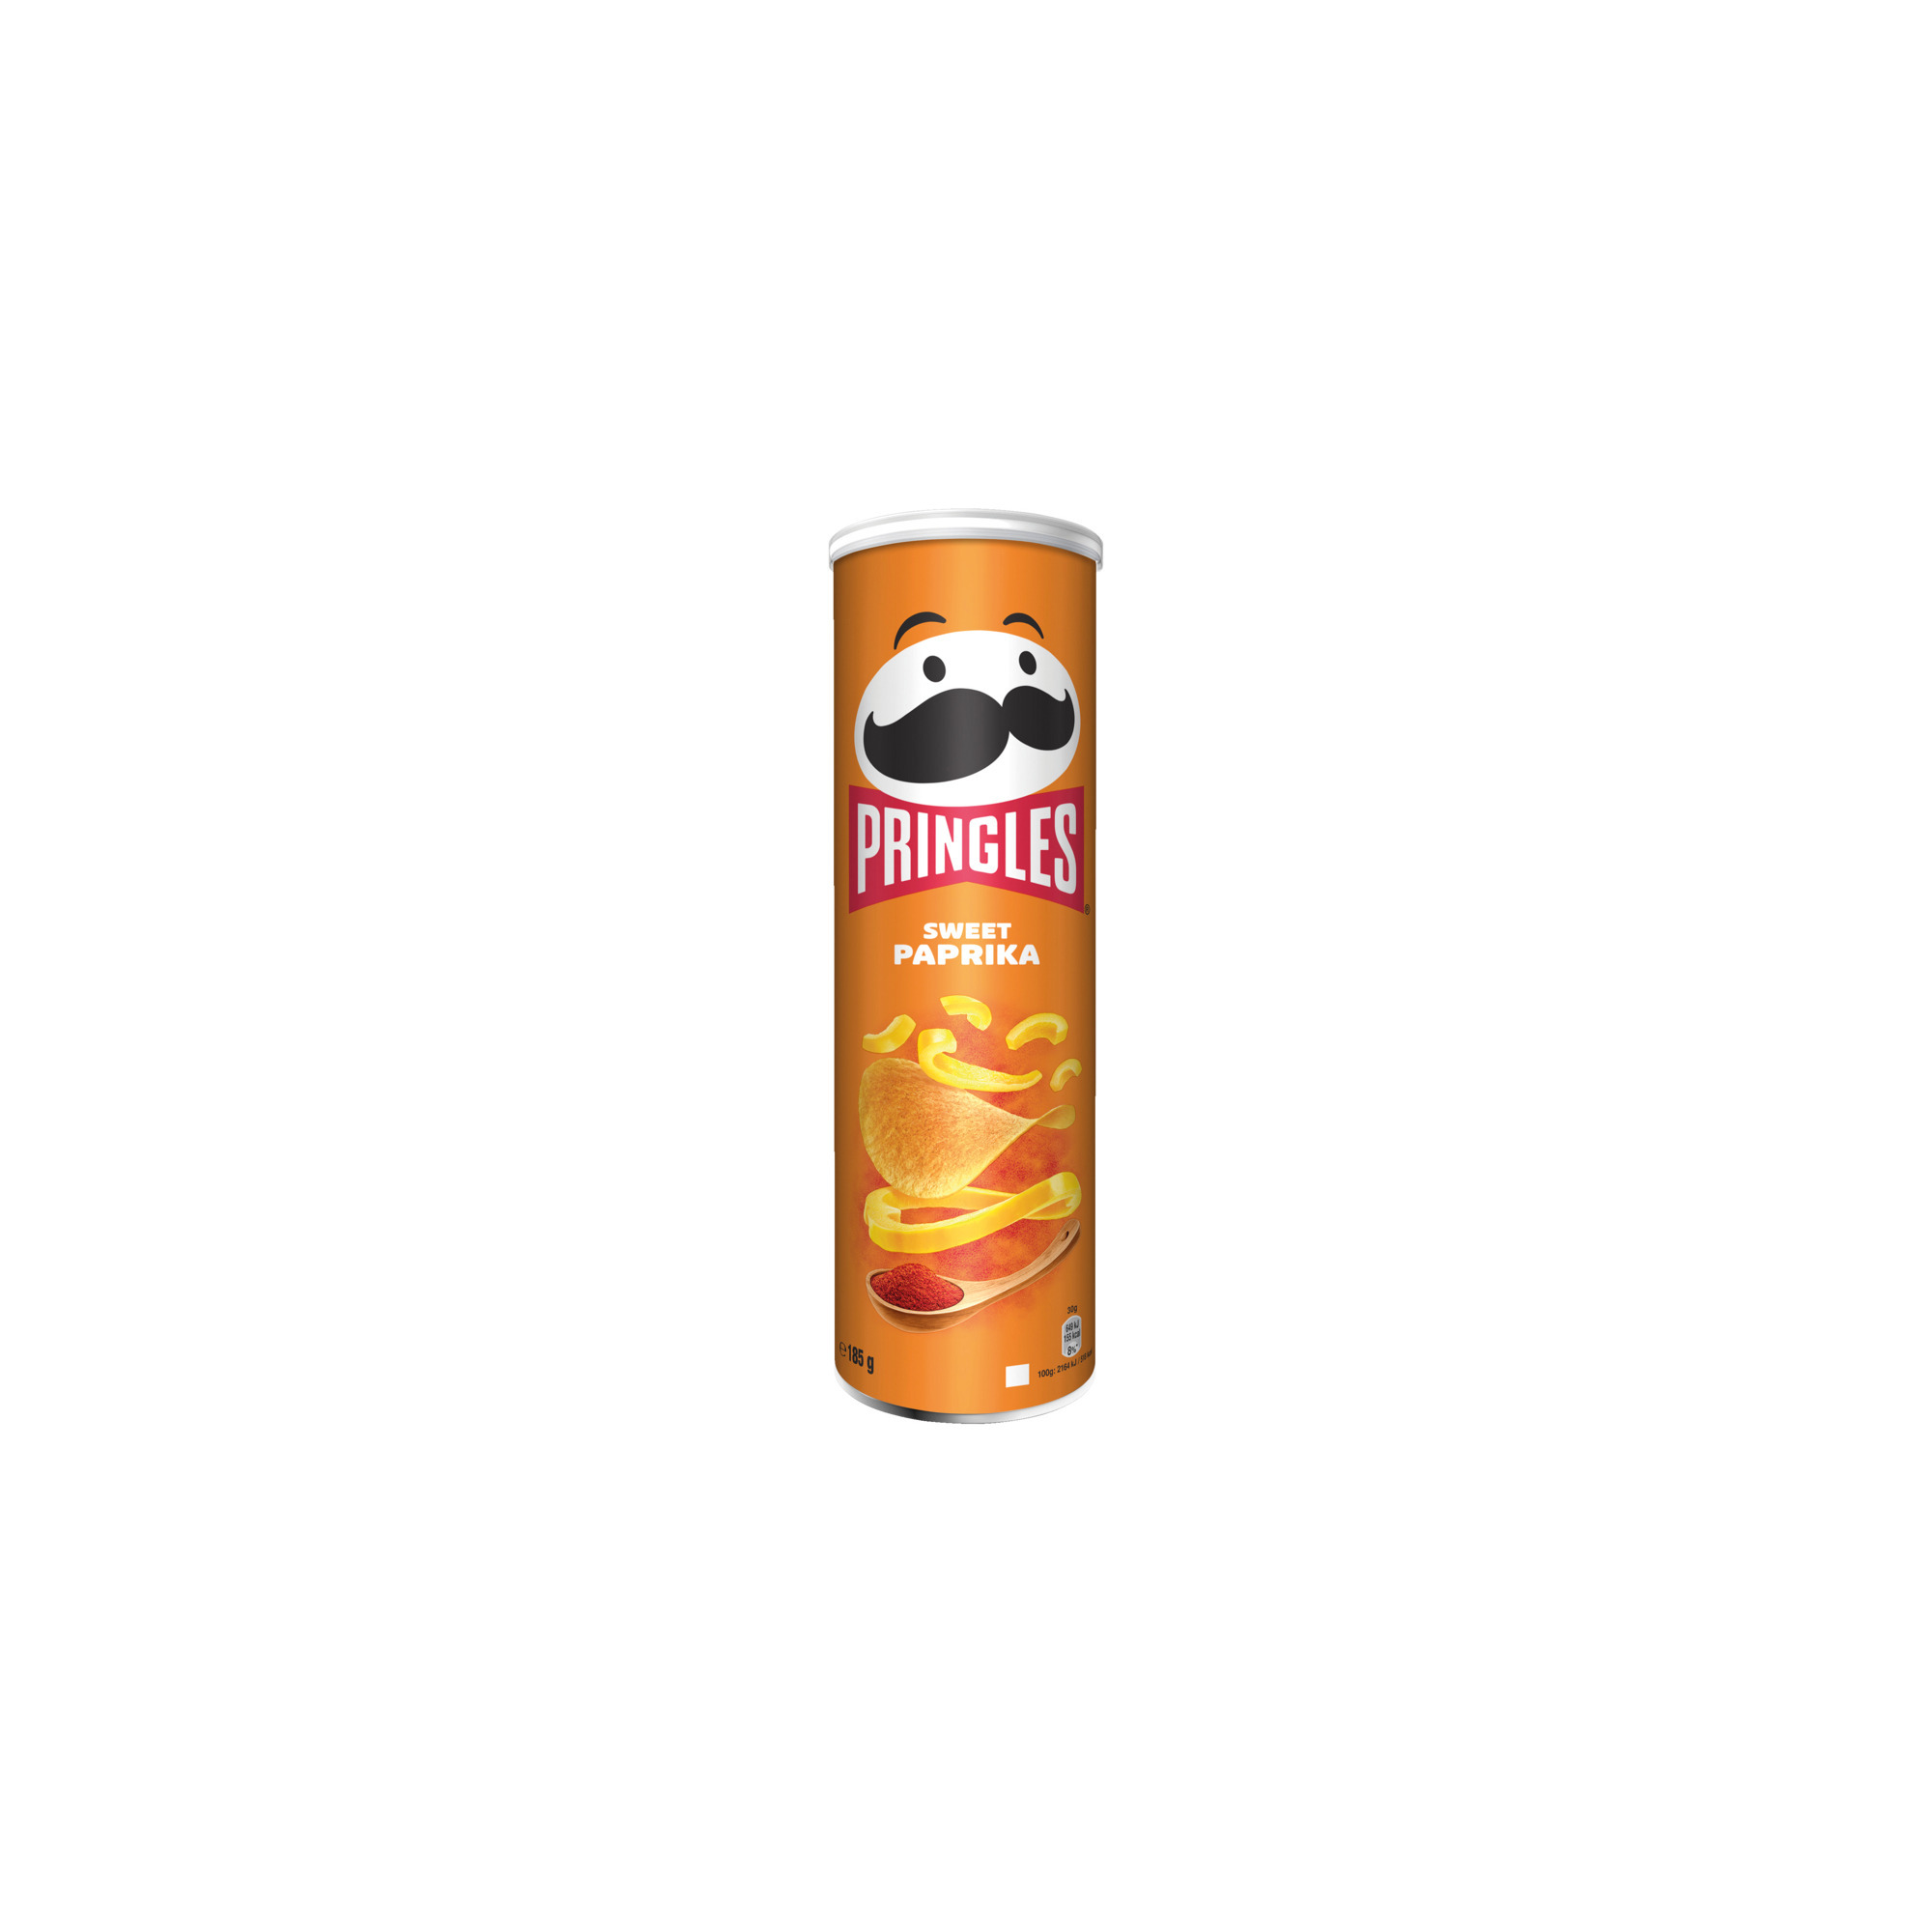 Pringles 185g, Sweet Paprika